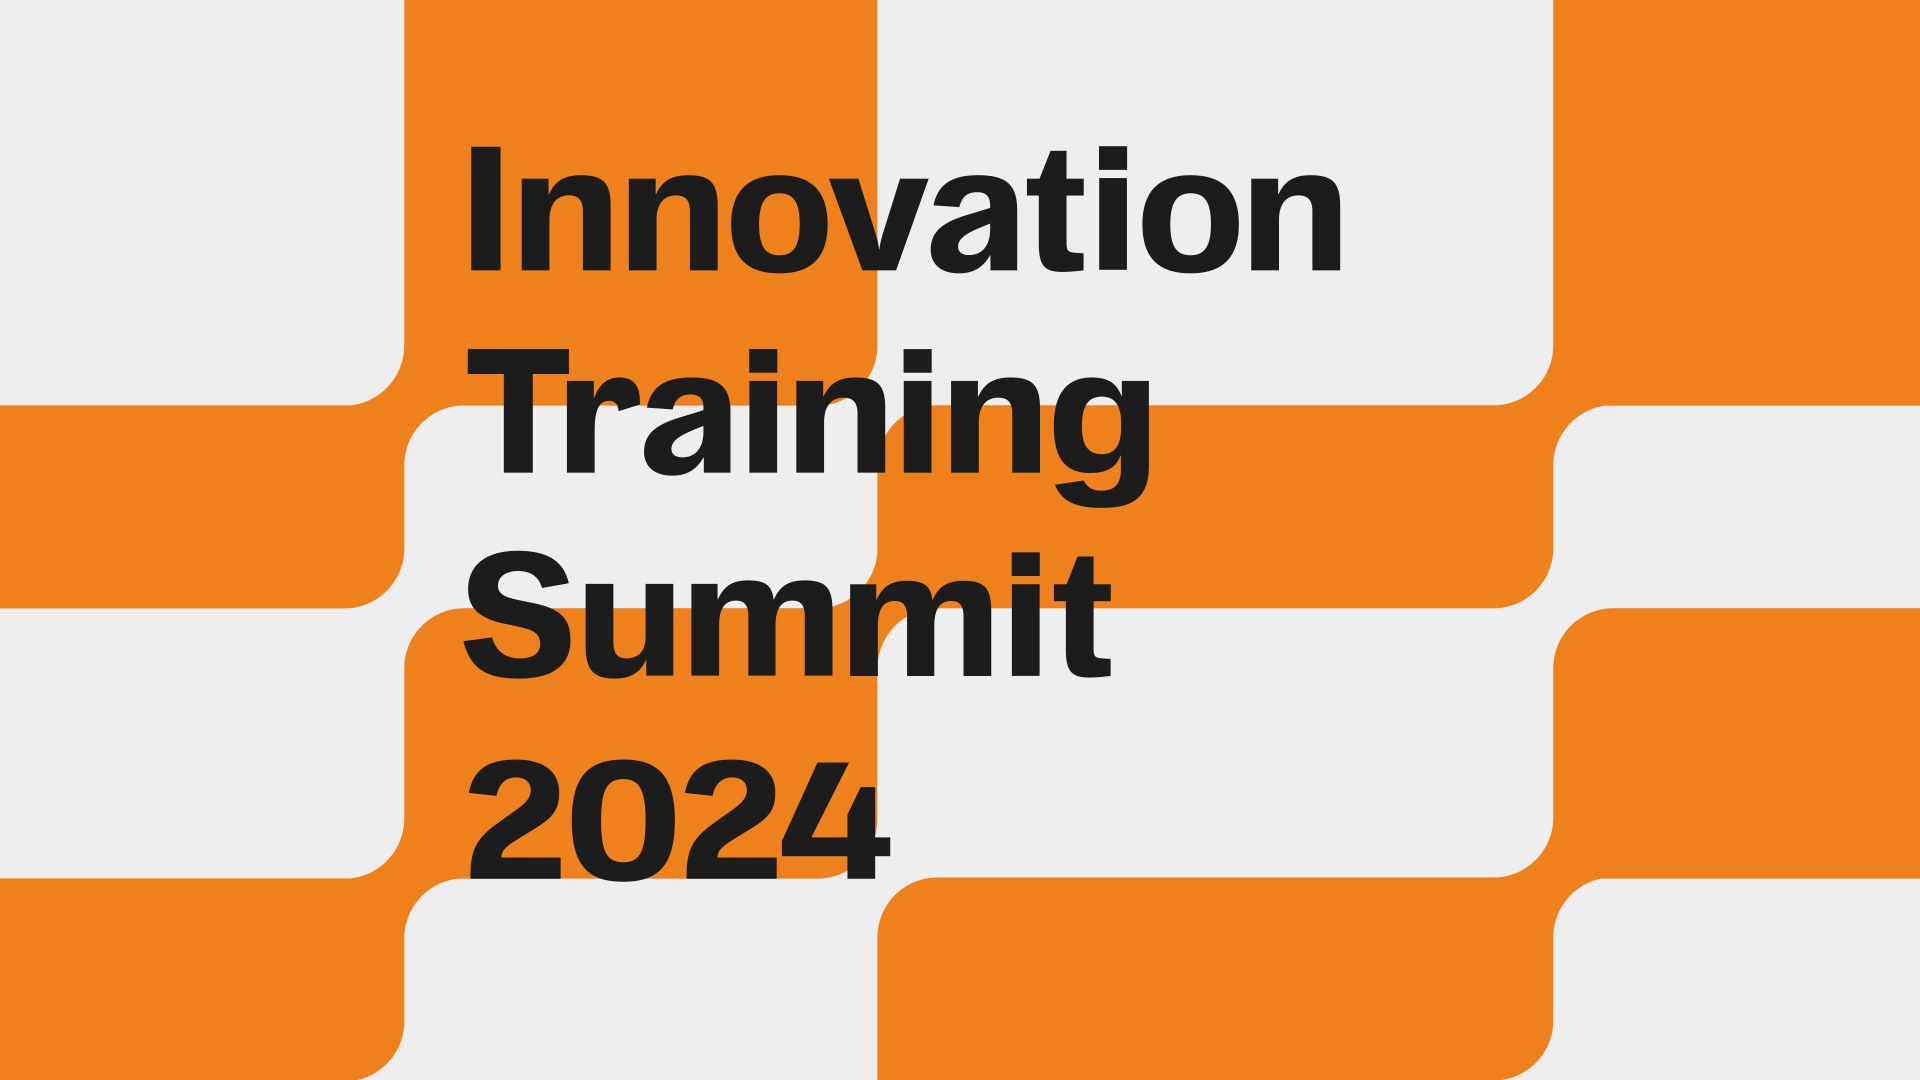 Innovation Training Summit 2024: a Dynamic Brand Identity for the Future of B2B Education